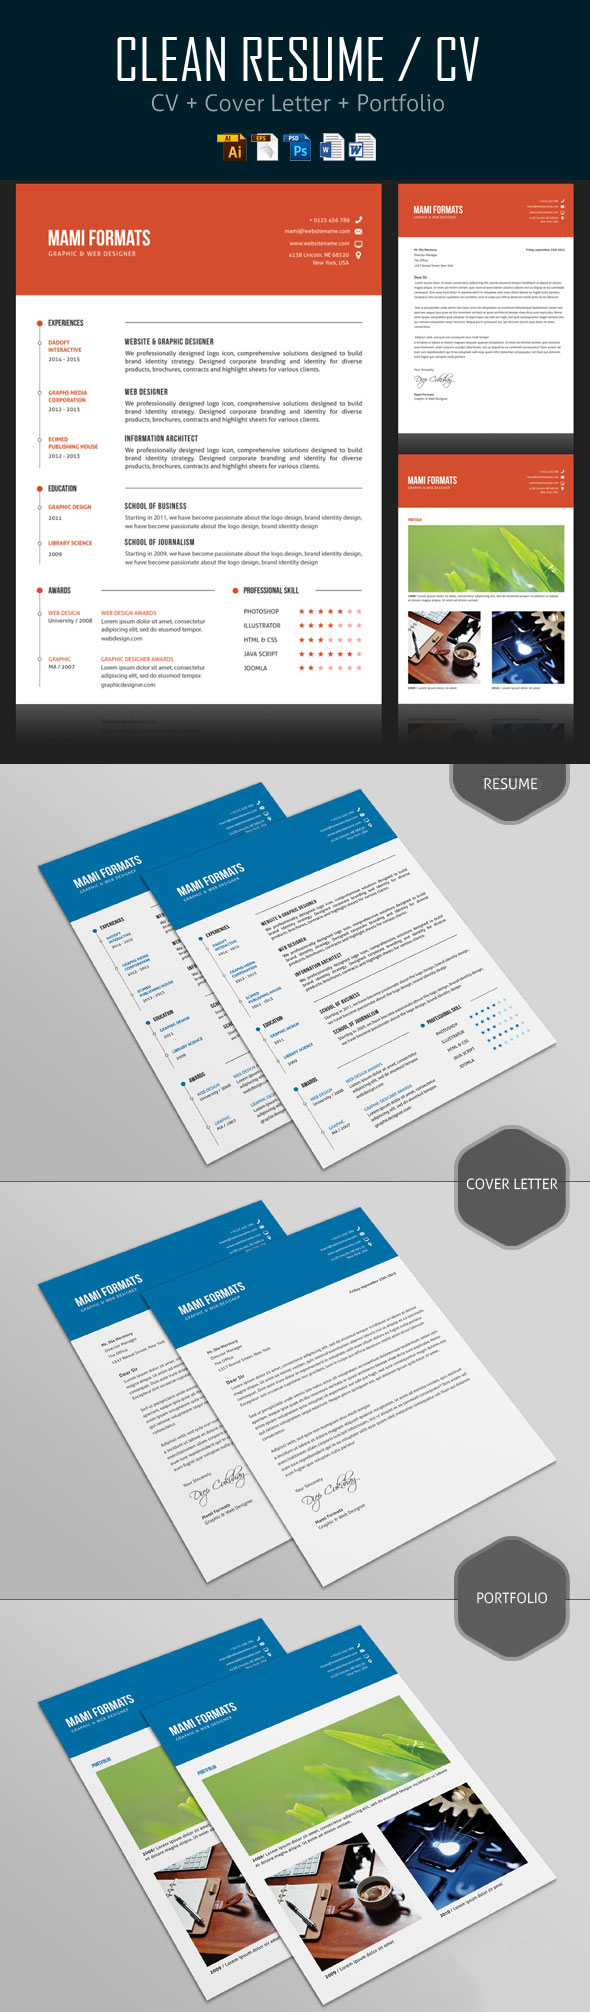 Simple CV/Resume & Cover Letter Design